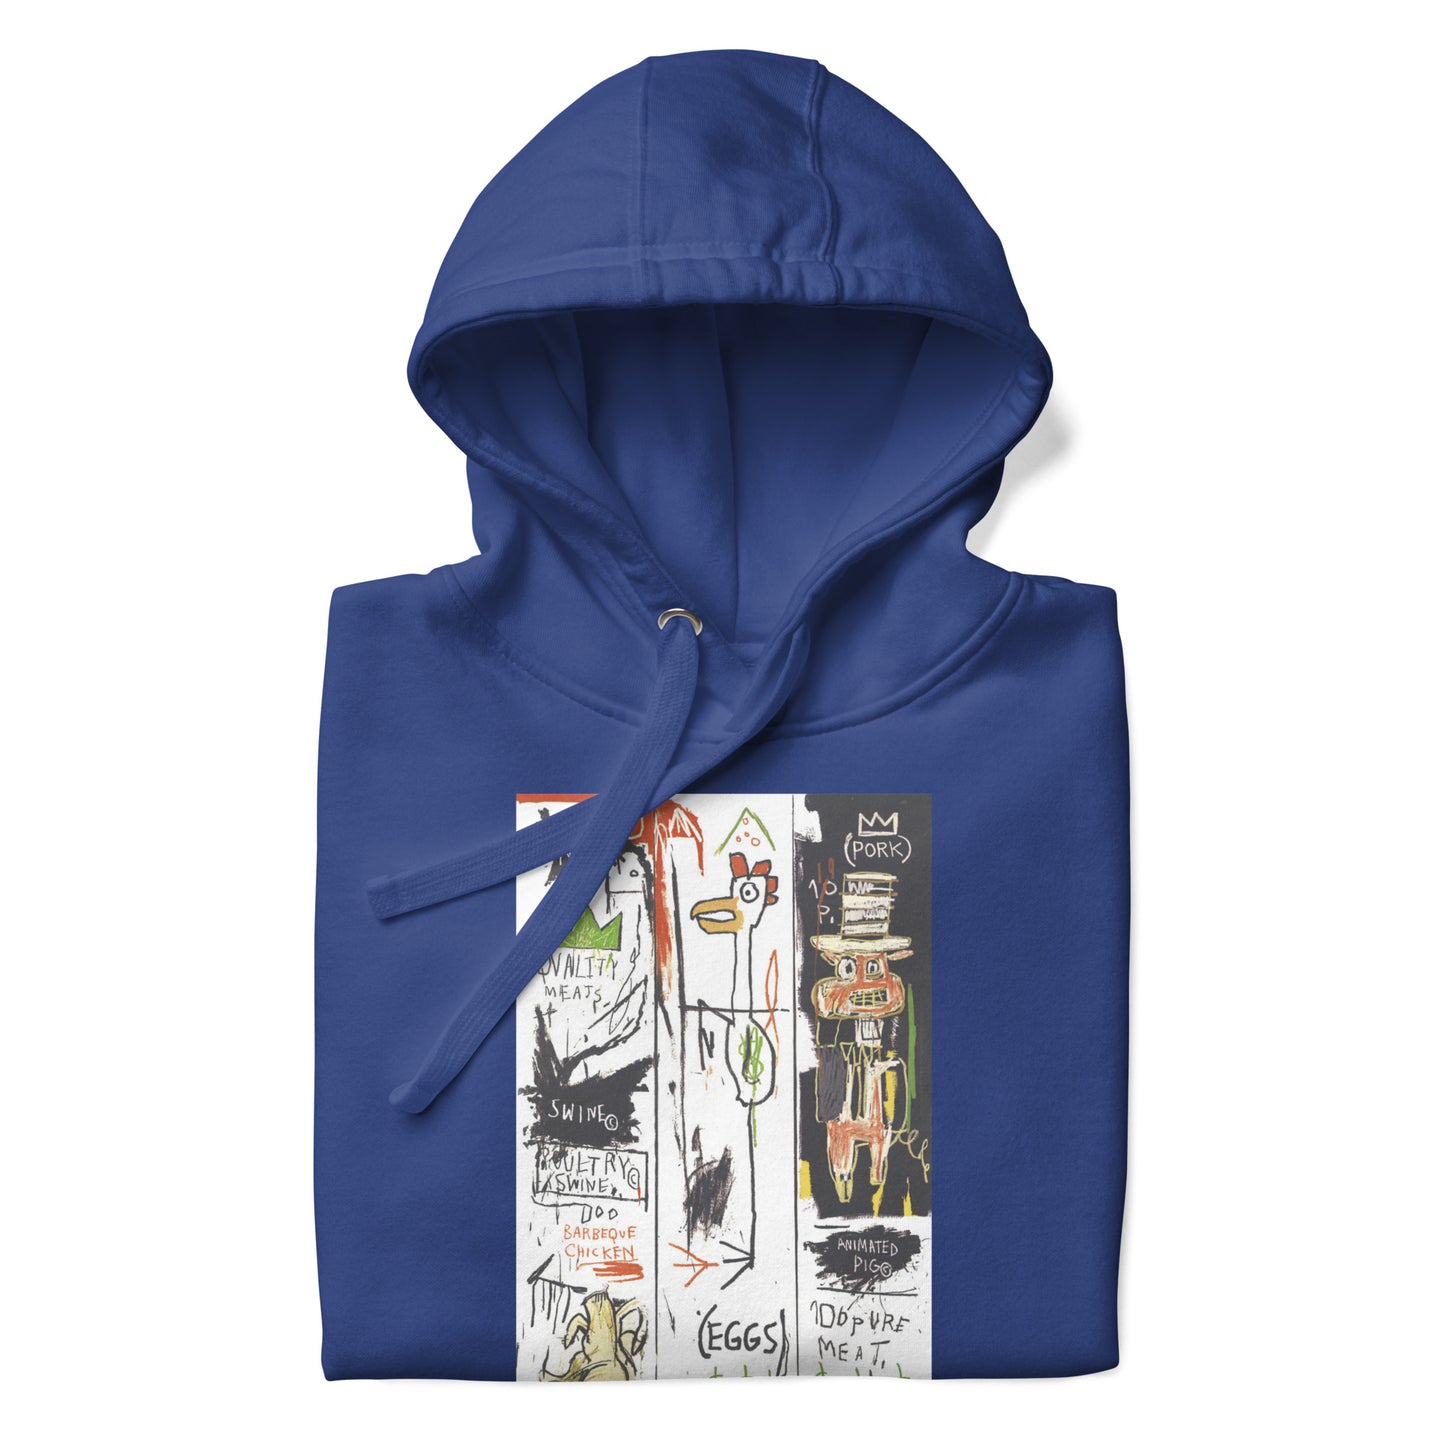 Jean-Michel Basquiat "Quality Meats for the Public" 1982 Artwork Printed Premium Streetwear Sweatshirt Hoodie Royal Blue